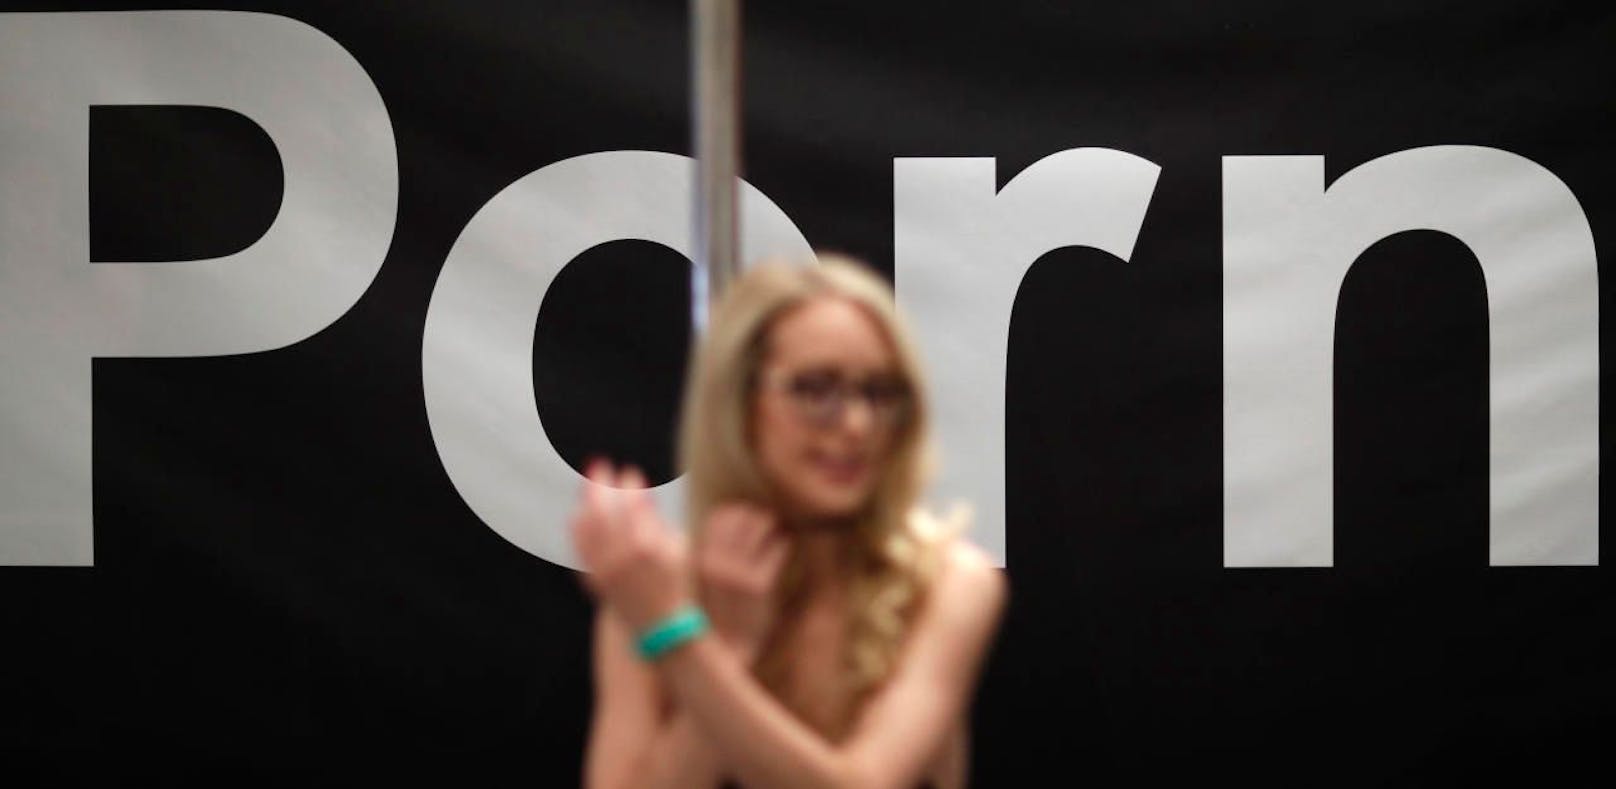 Porno-Star Ginger Banks am Pornhub-Stand der AVN Adult Entertainment Expo in Las Vegas. Die Suche nach &quot;Coronavirus&quot; am Portal steigt an.